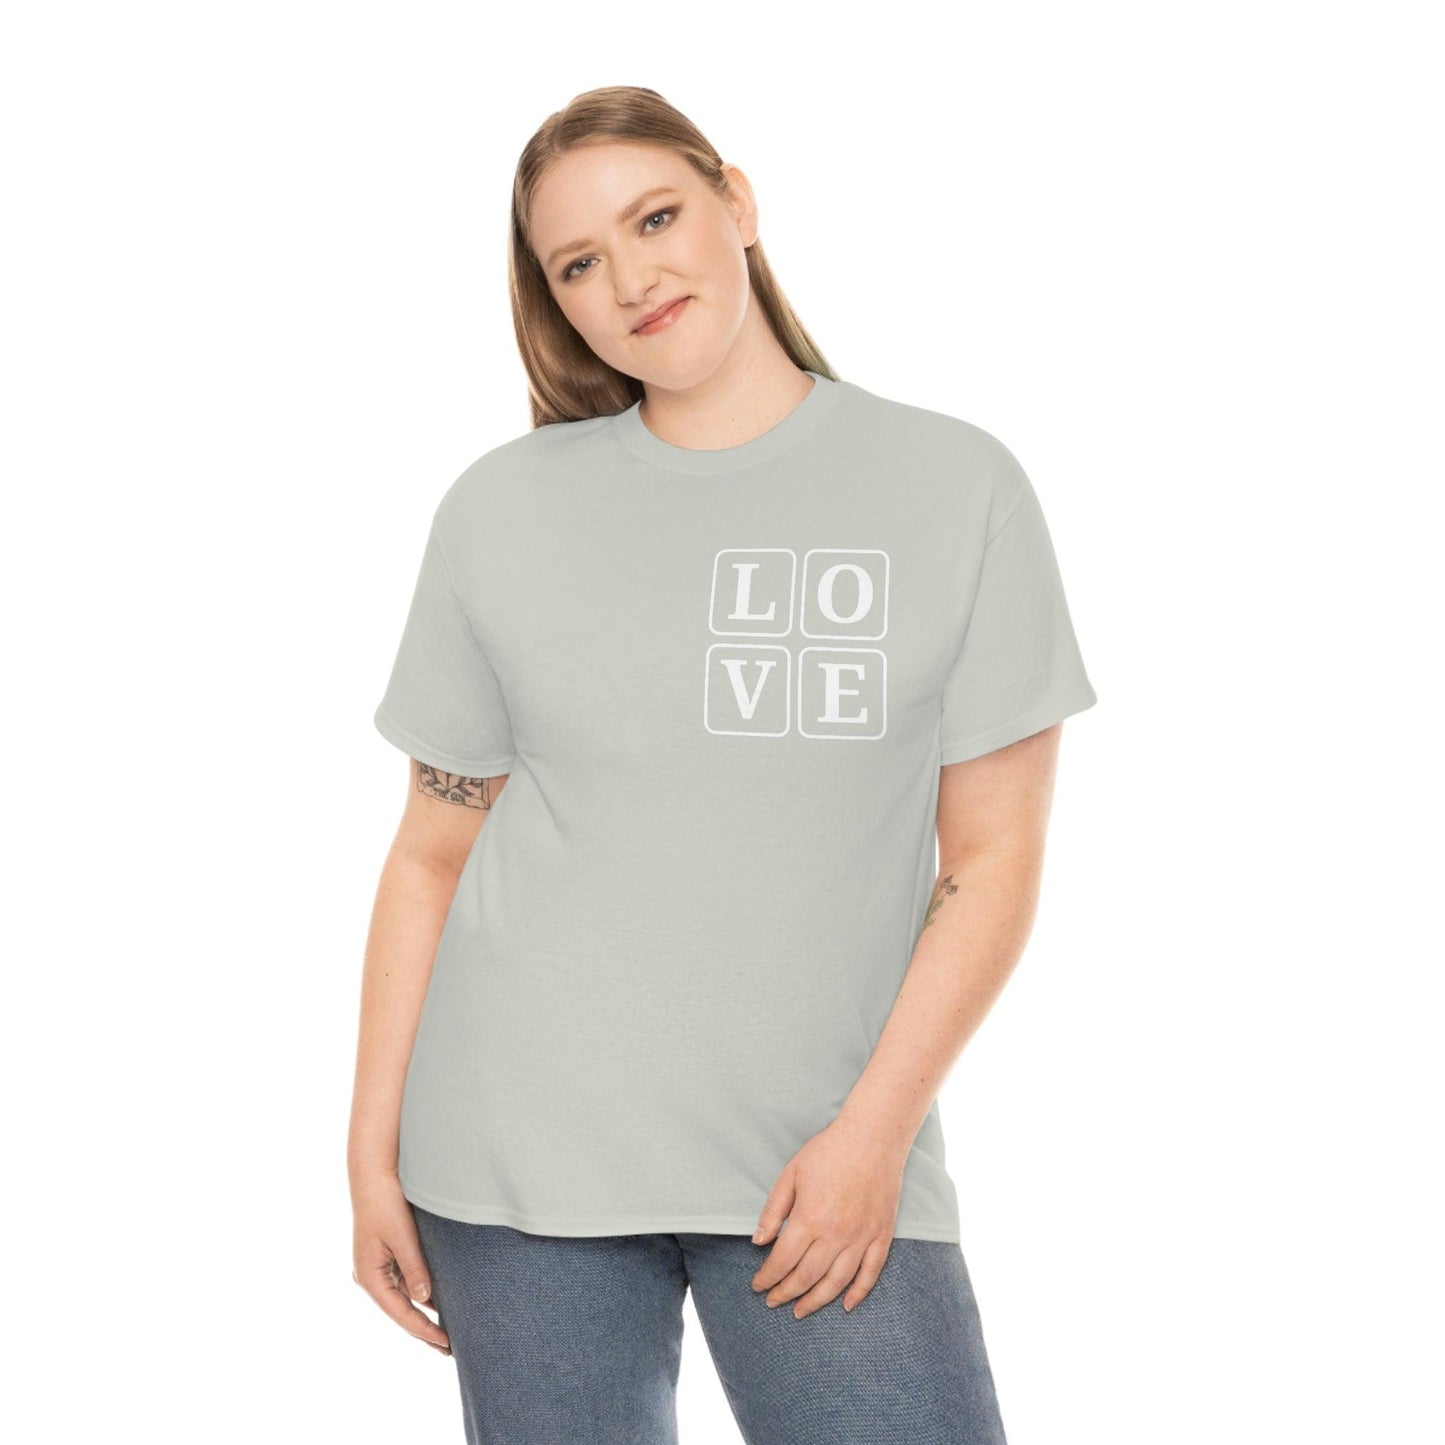 Love Square T-Shirt,